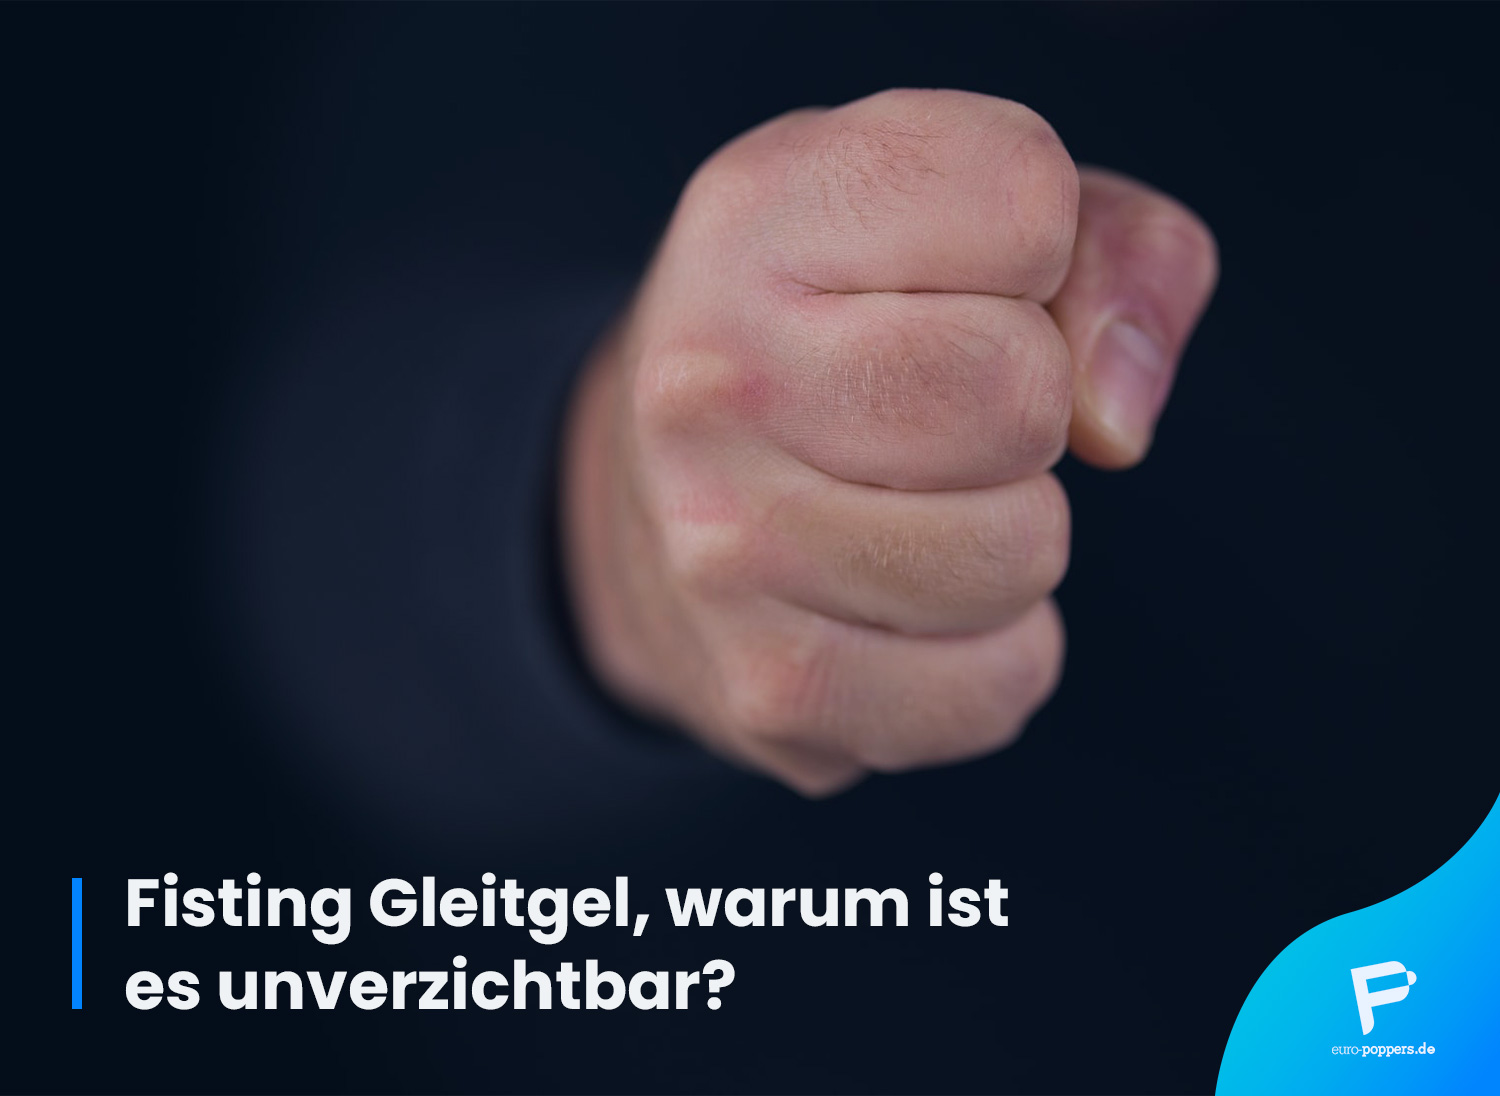 You are currently viewing Fisting Gleitgel, warum ist es unverzichtbar?